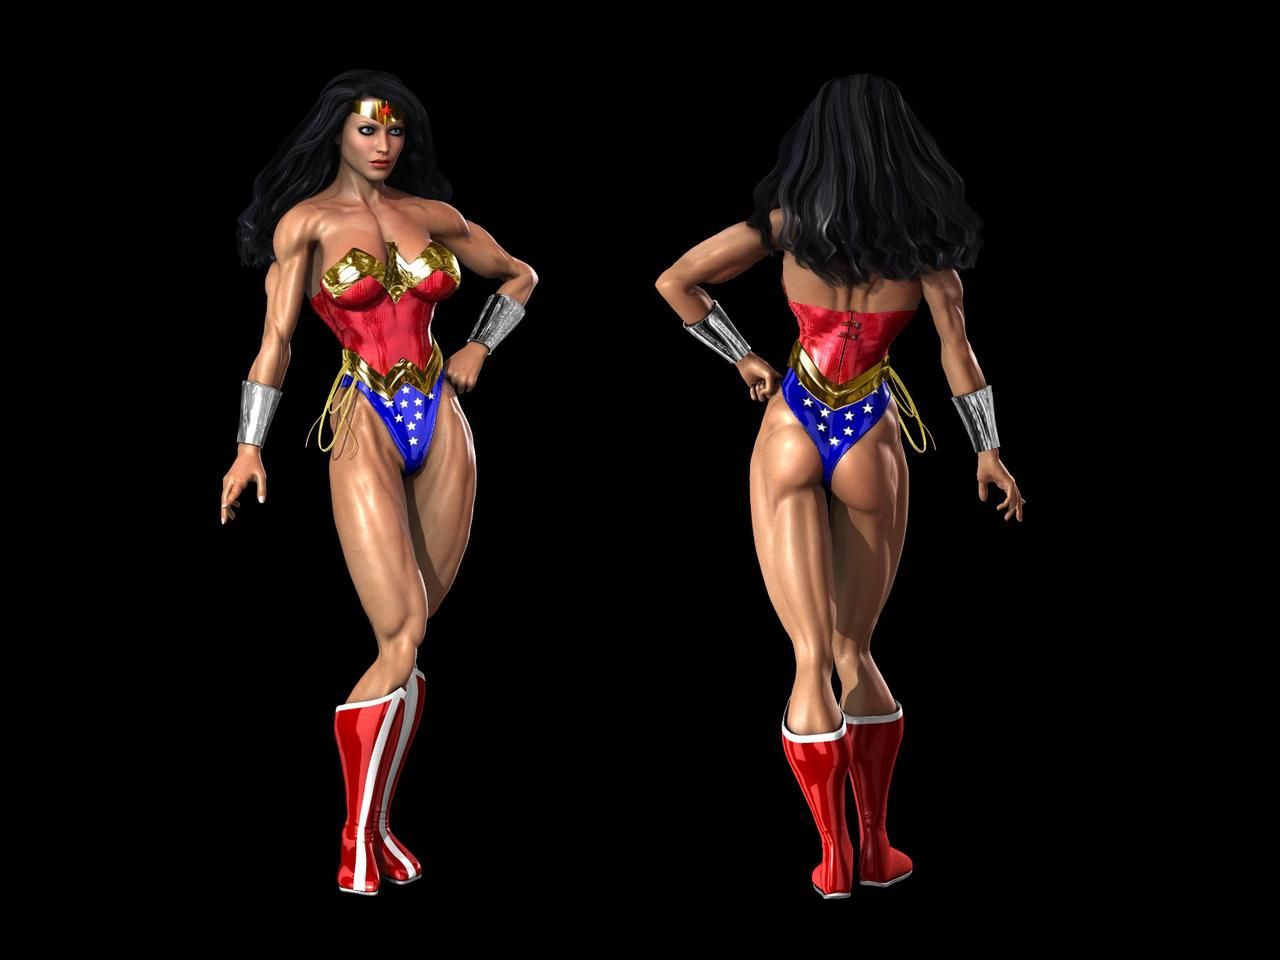 Muscle girls 3D models_ part 2 by Tigersan 80